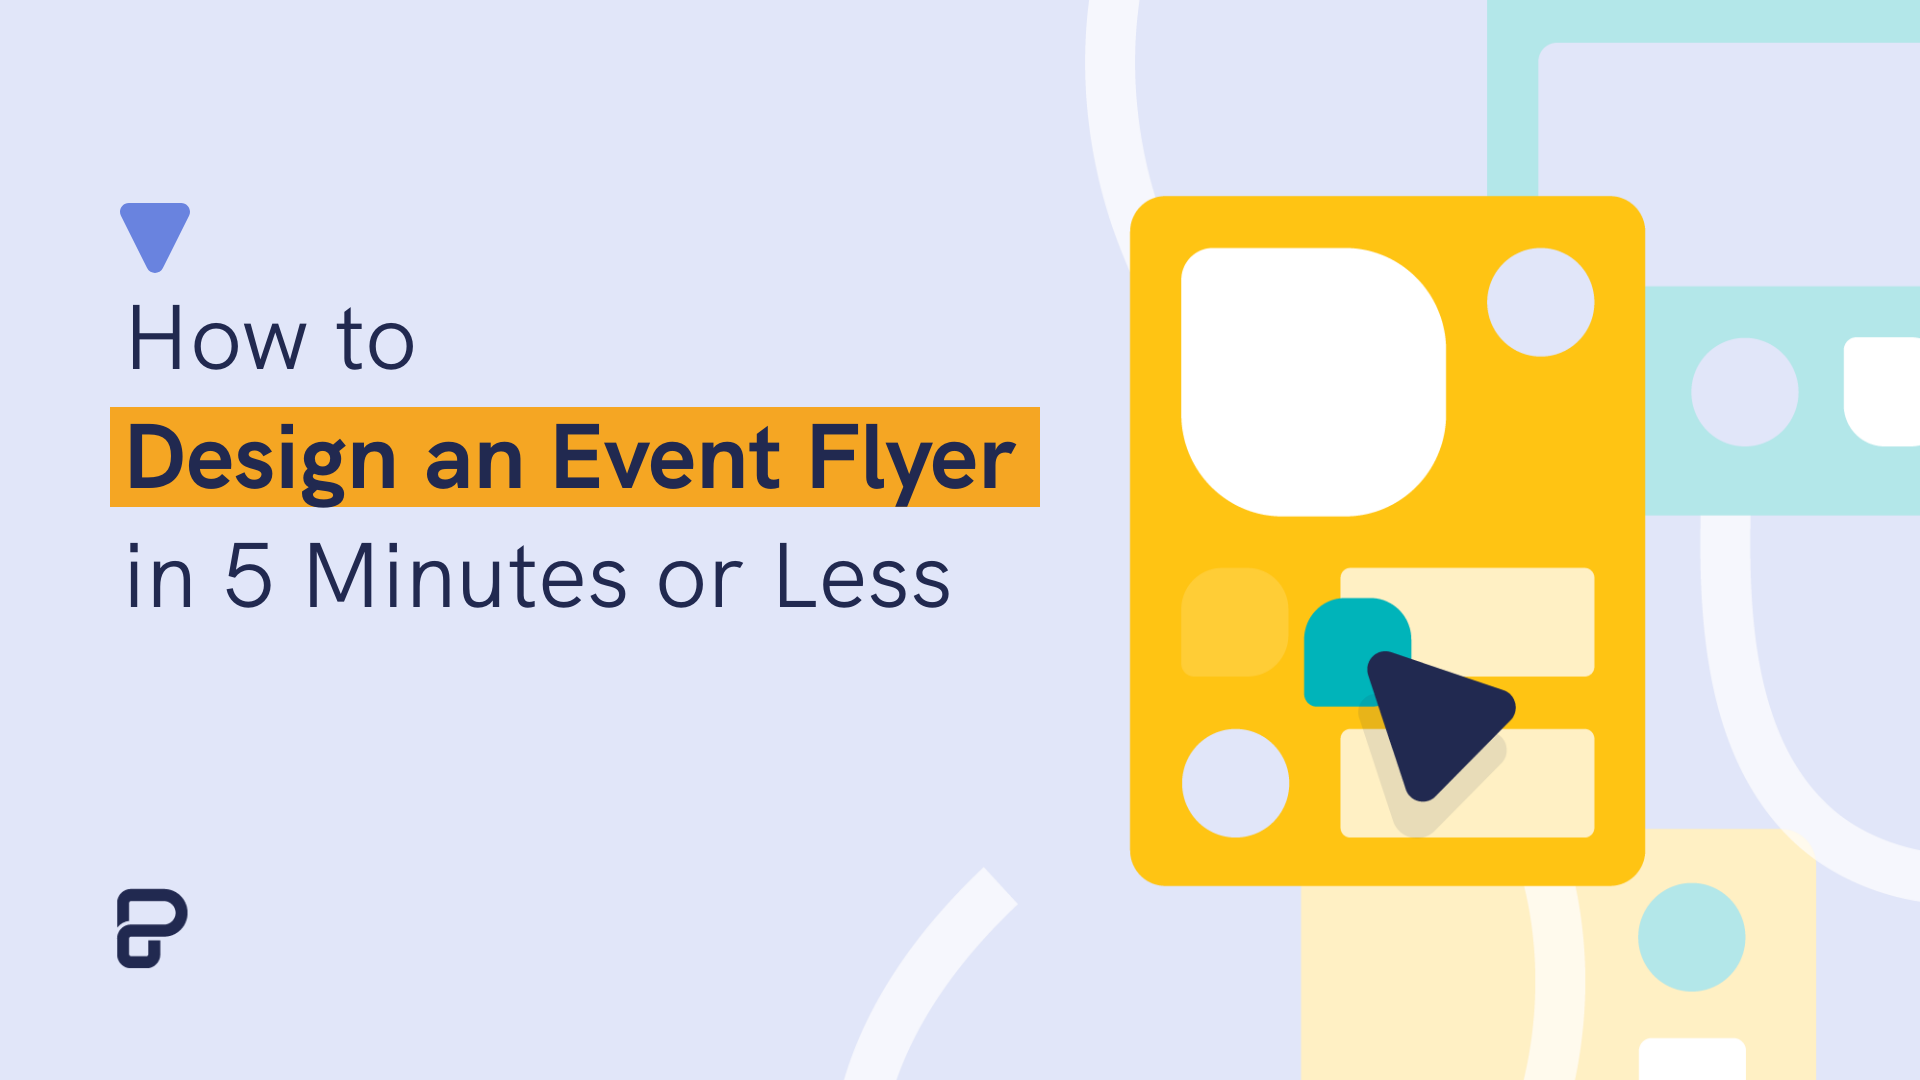 event flyer, design flyer, create event flyer fast